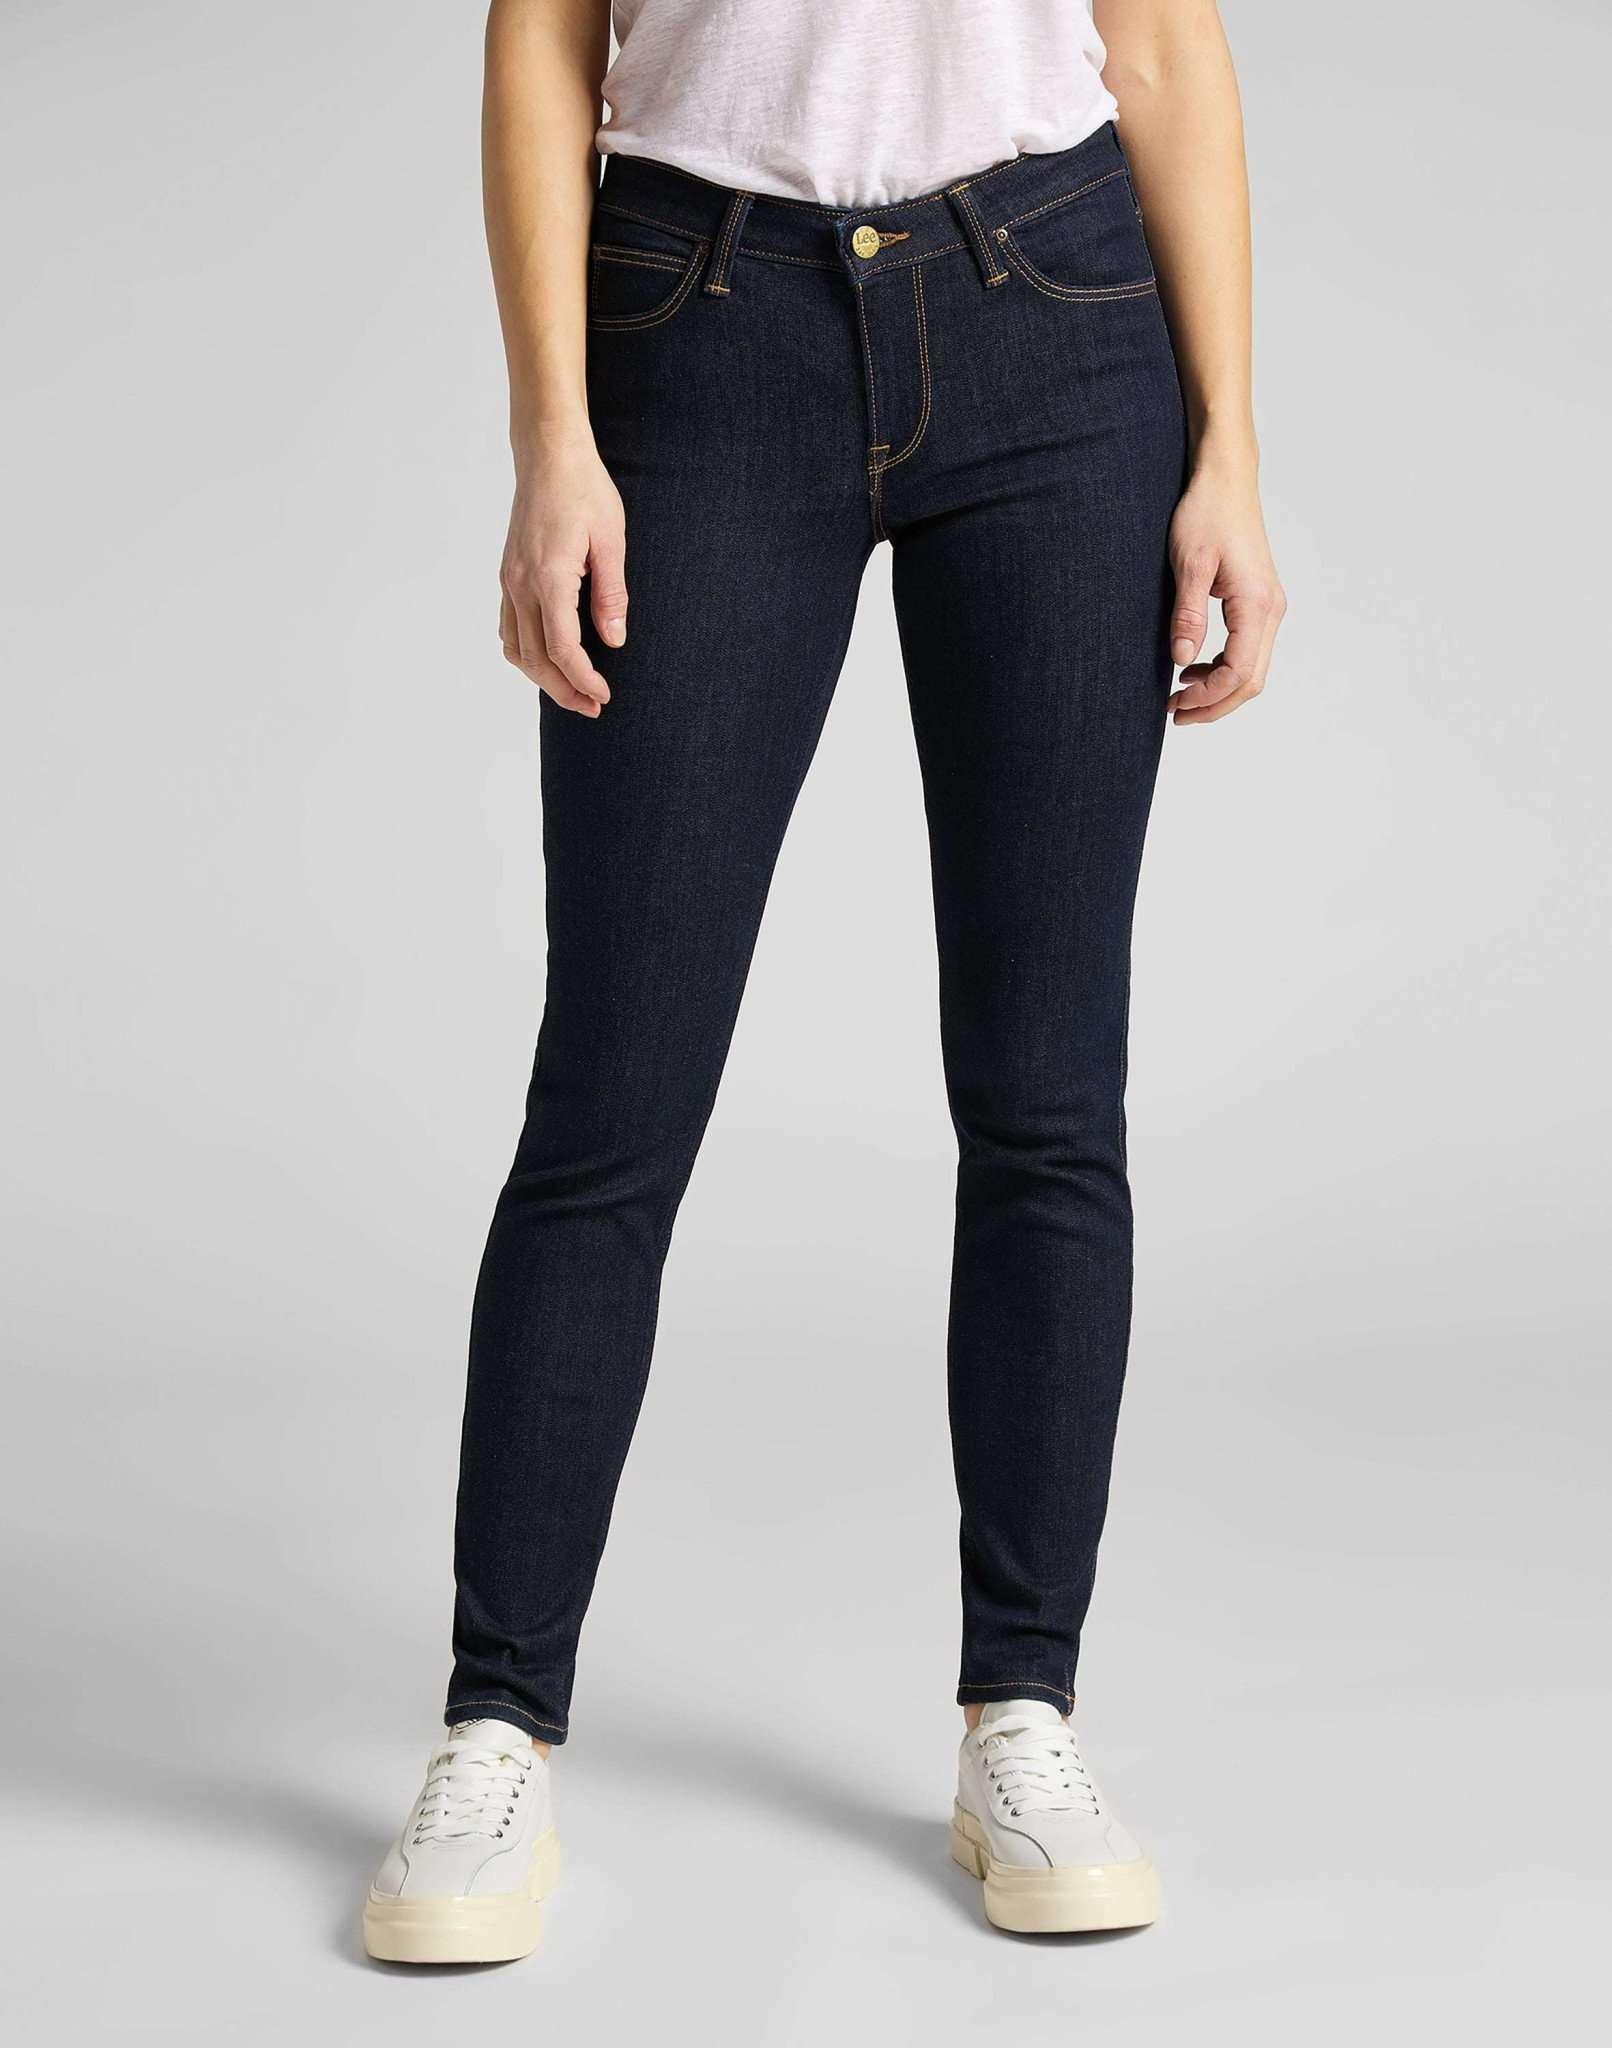 Jeans Skinny Fit Scarlett Damen Blau Denim L33/W29 von Lee